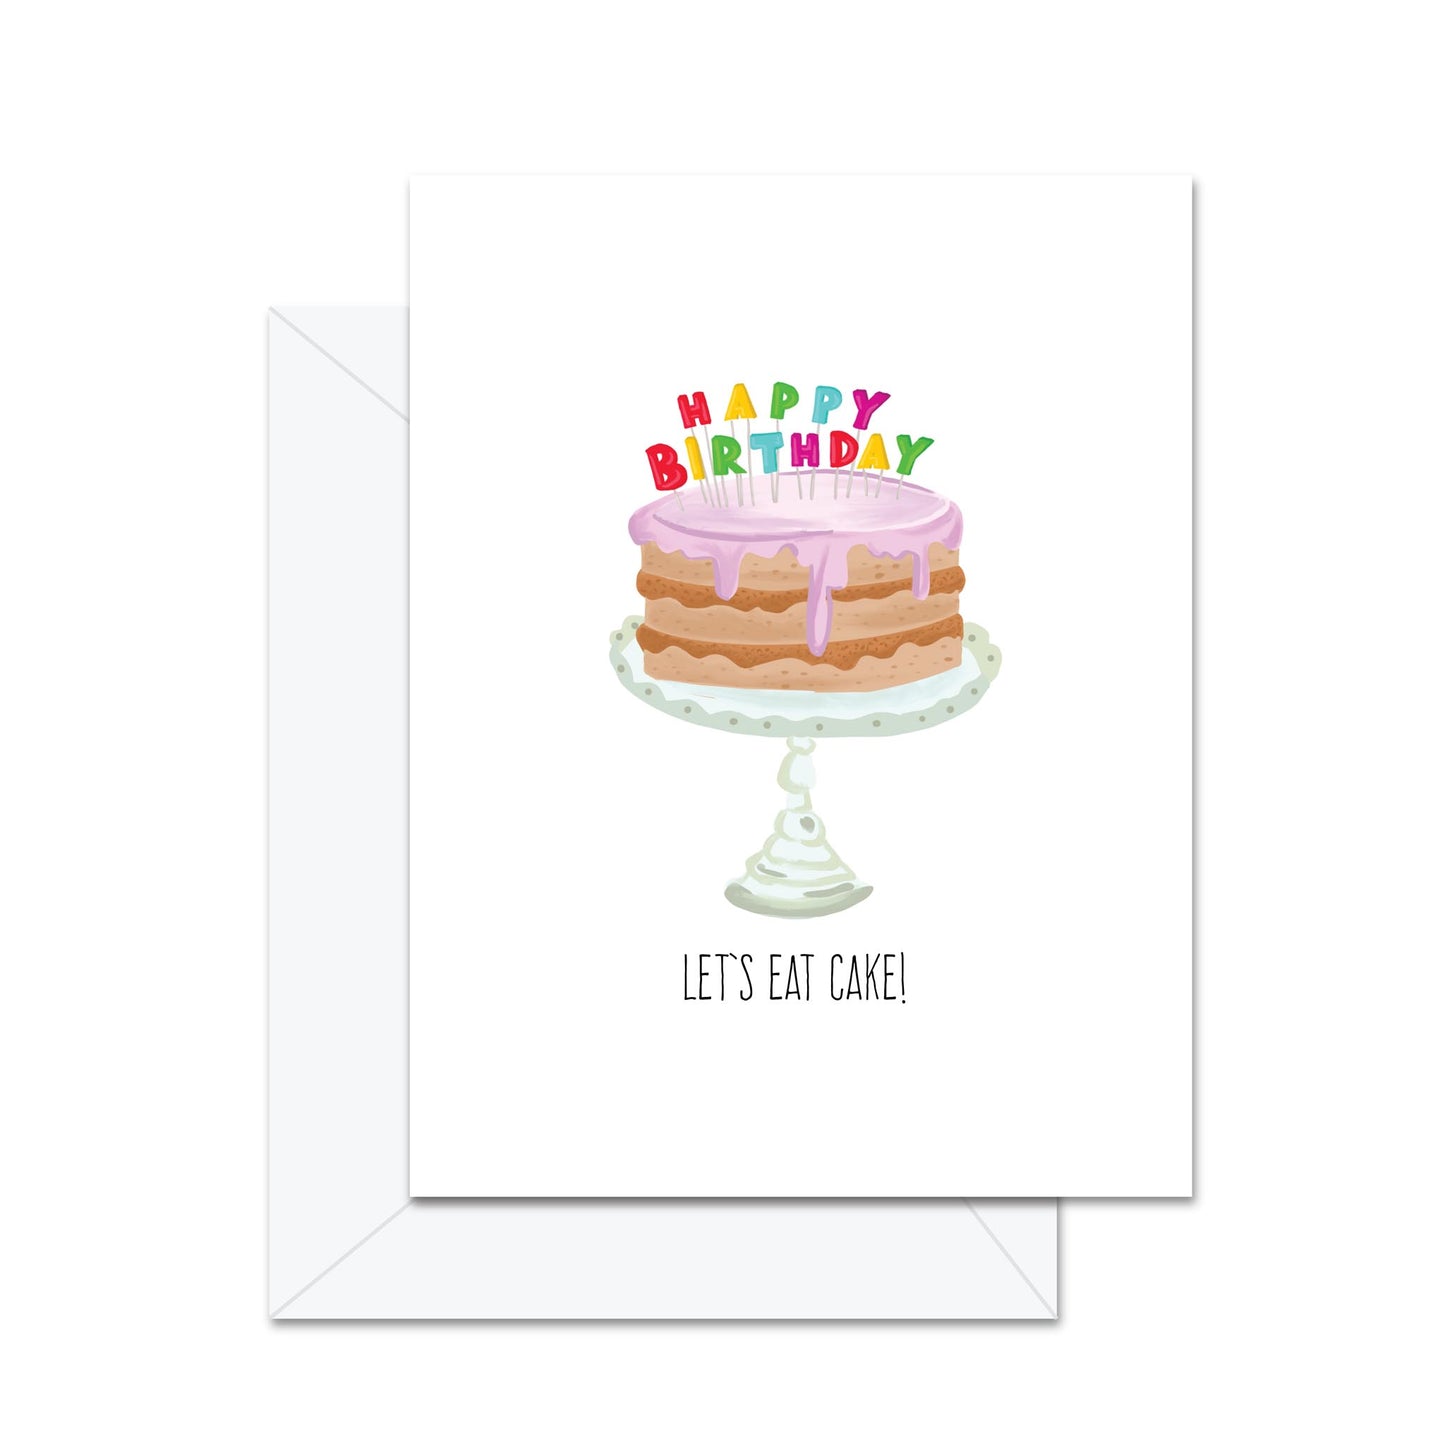 Let's Eat Cake! - Greeting Card